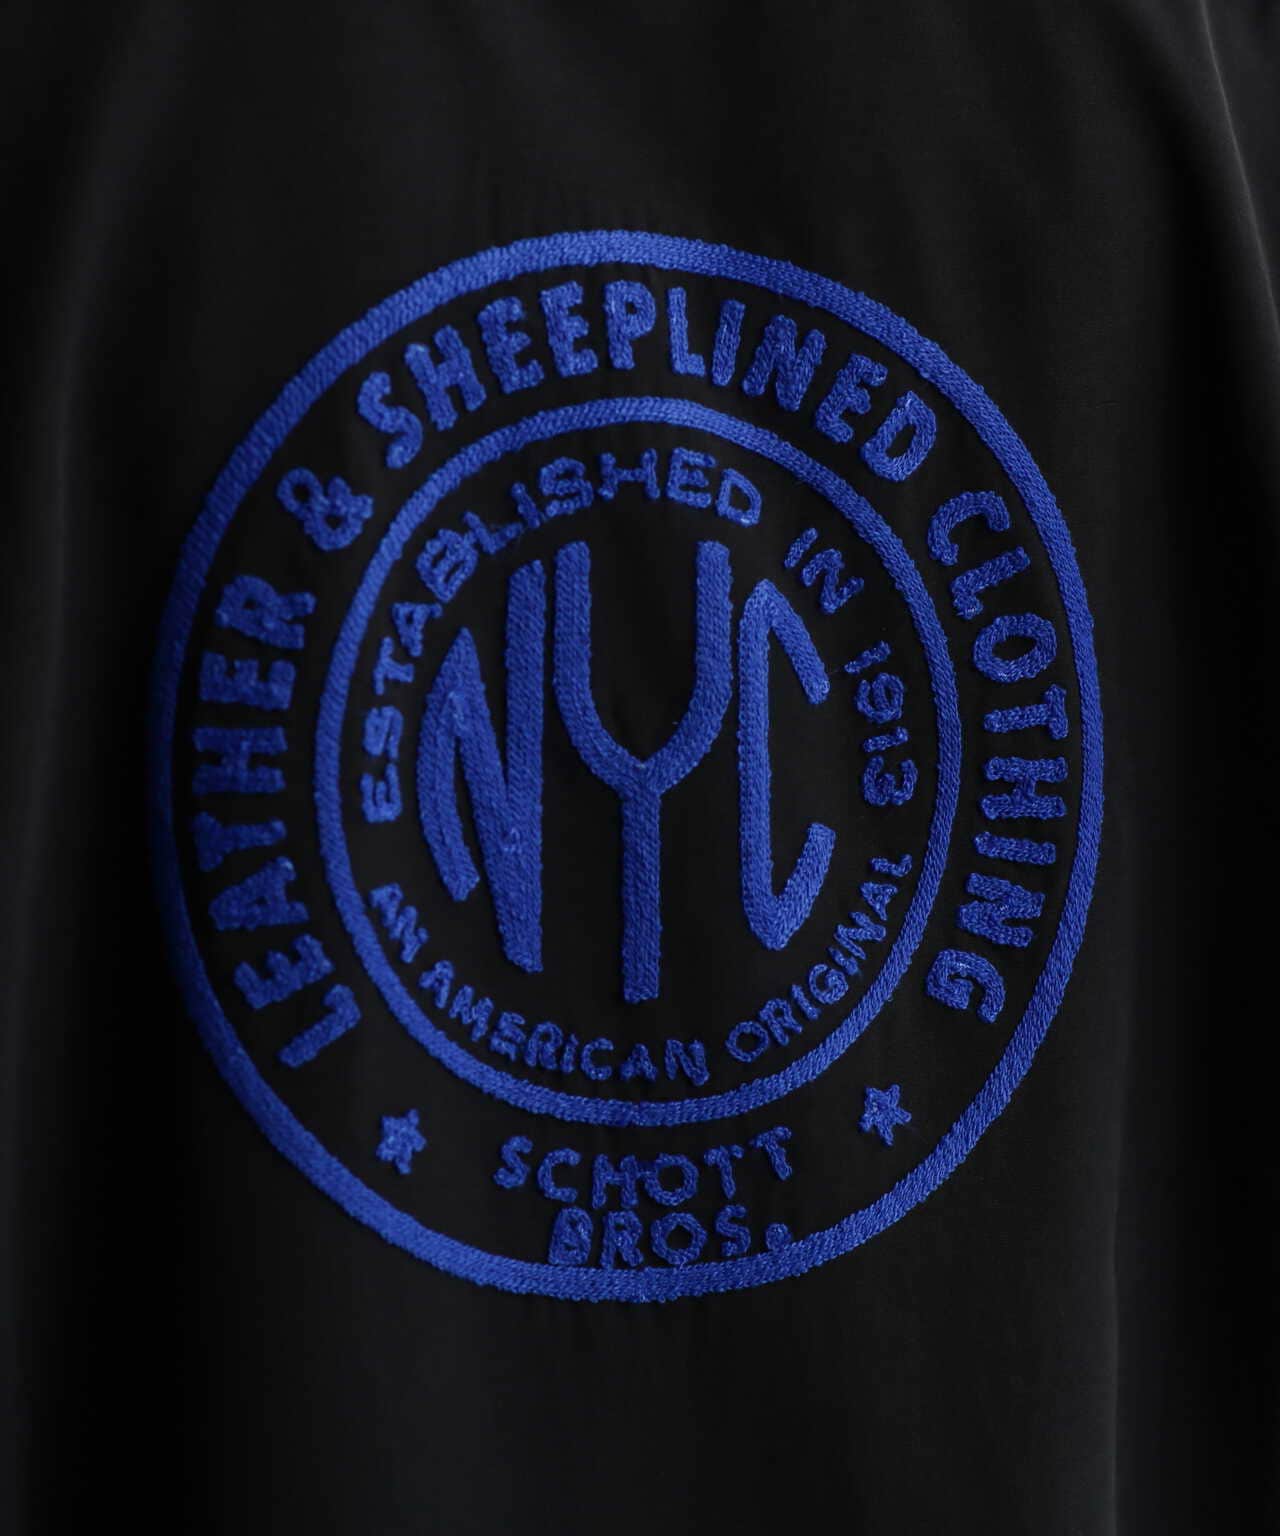 【WEB LIMITED】NYC EMB. TC SHIRT "STAMP" /刺繍 シャツ NYC"STAMP"